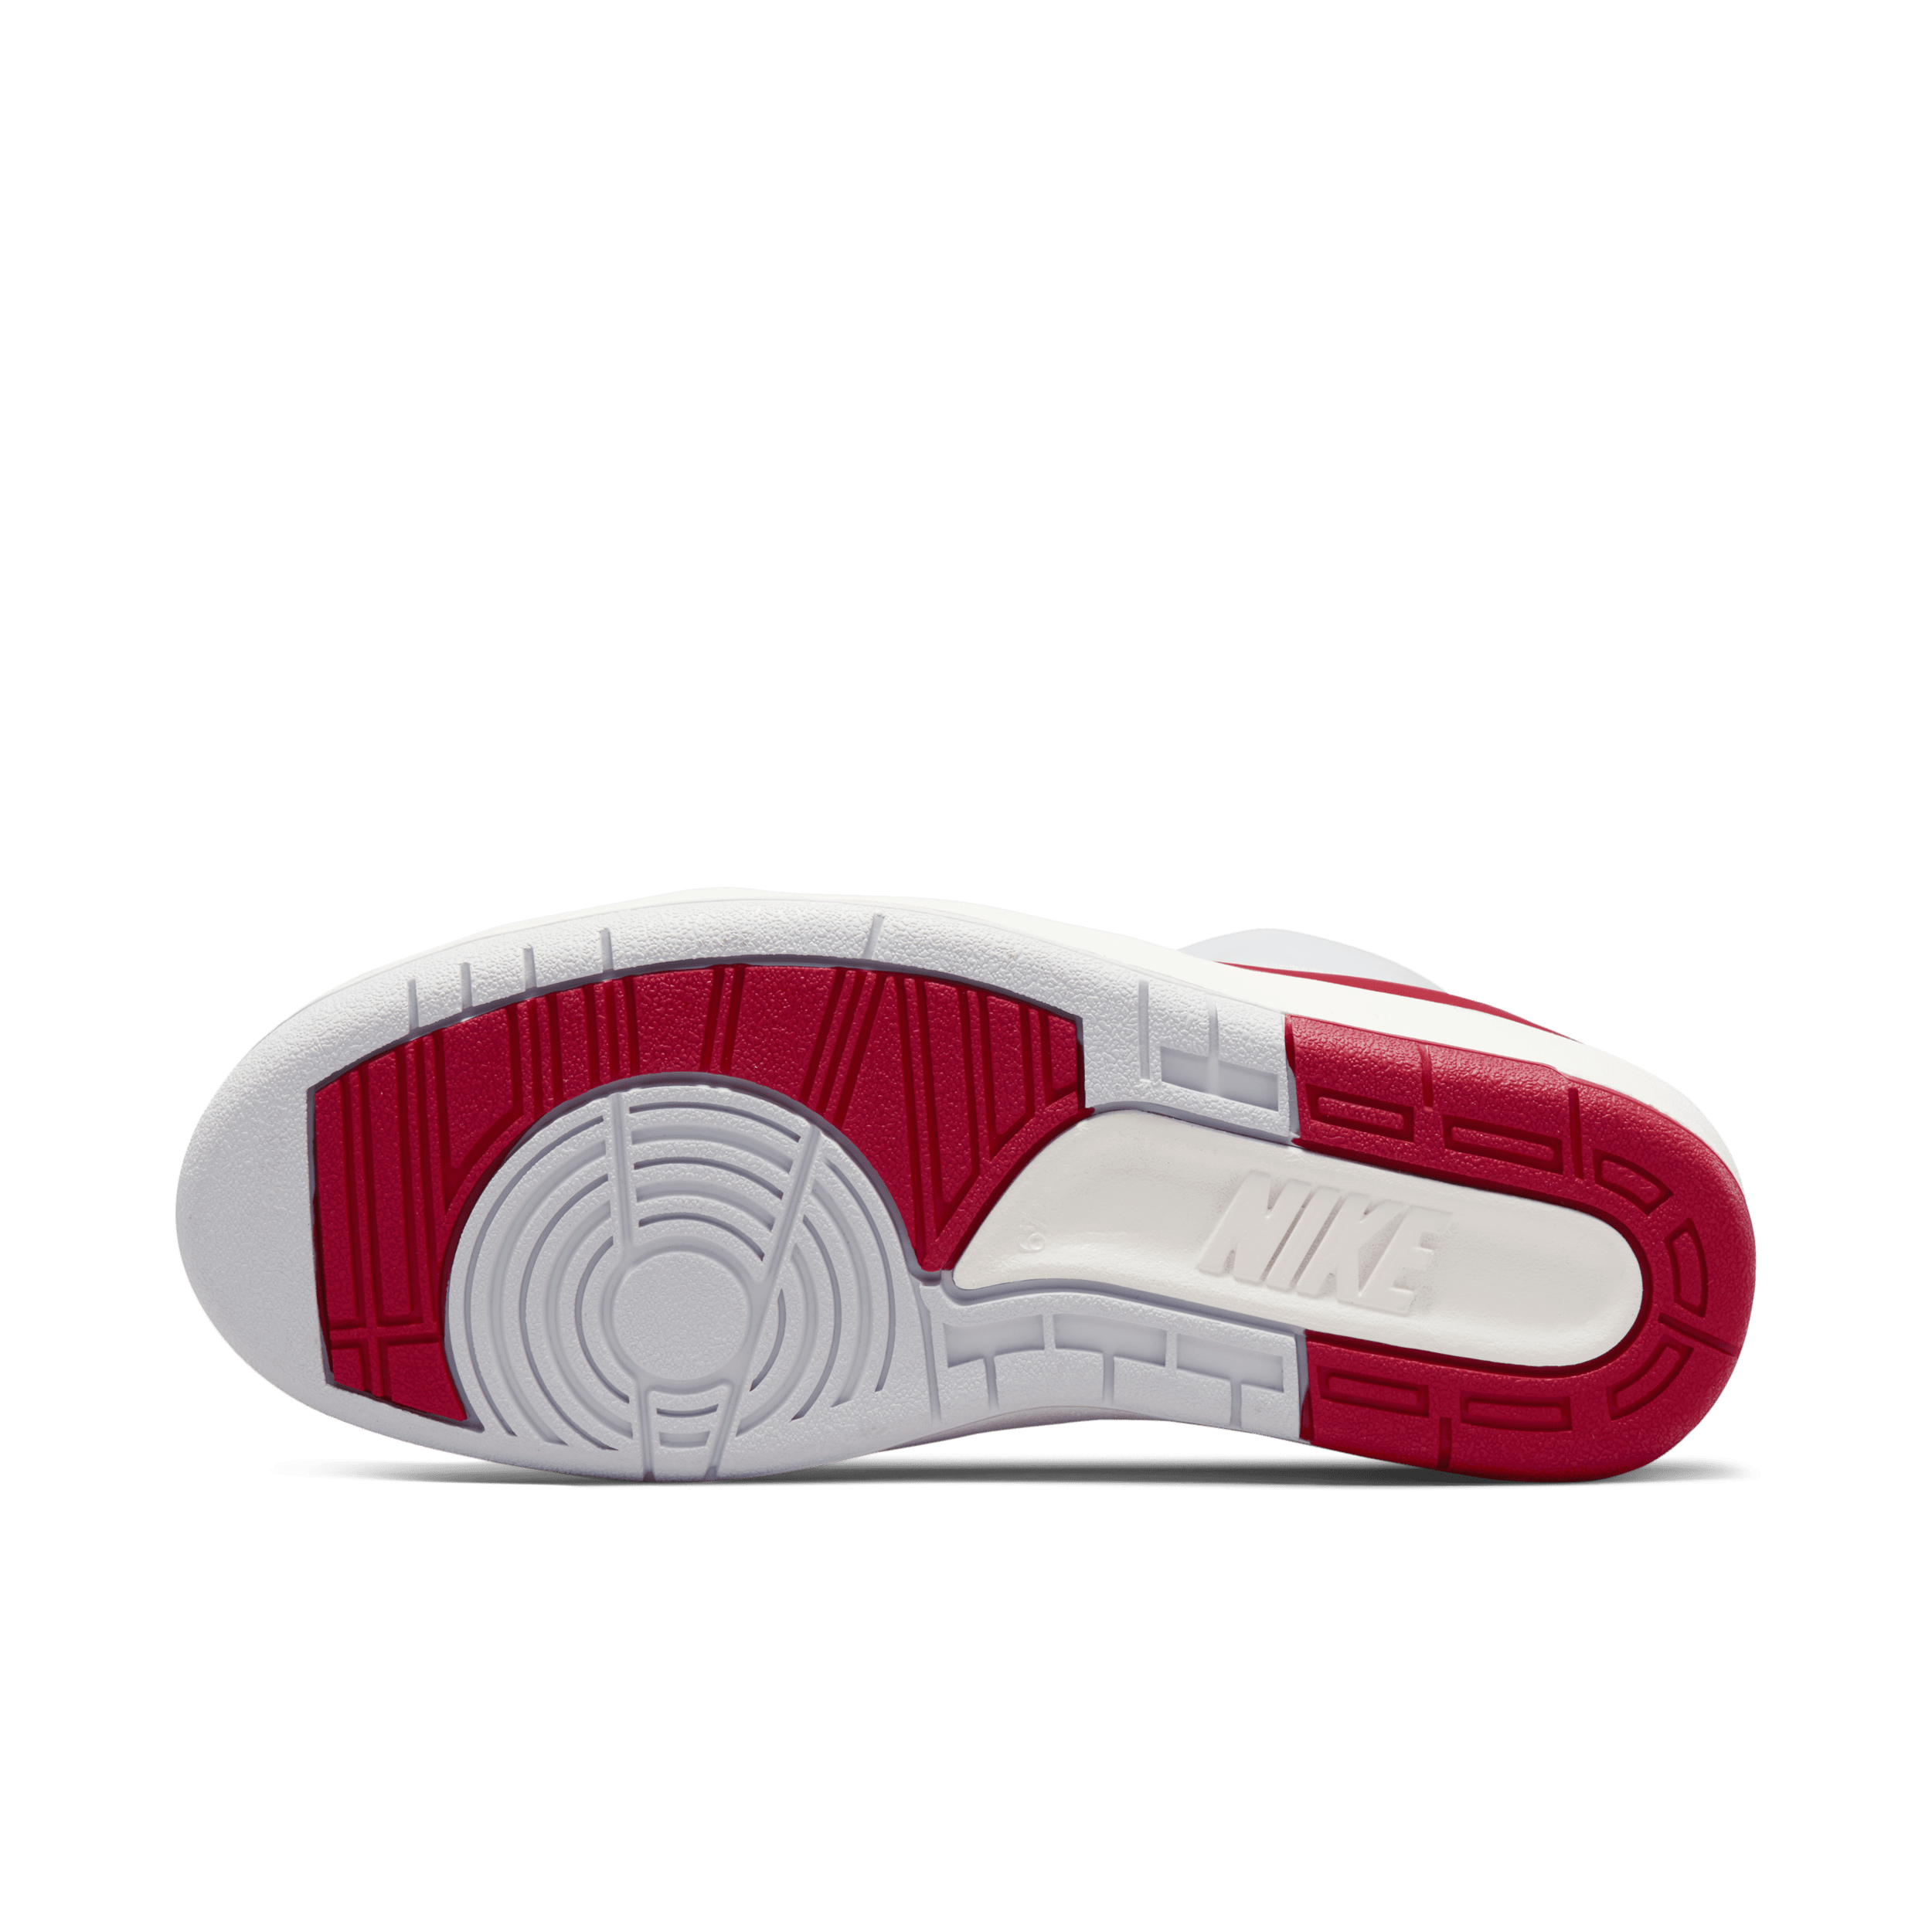 Air Jordan 2 Retro SE Damenschuh - Weiß